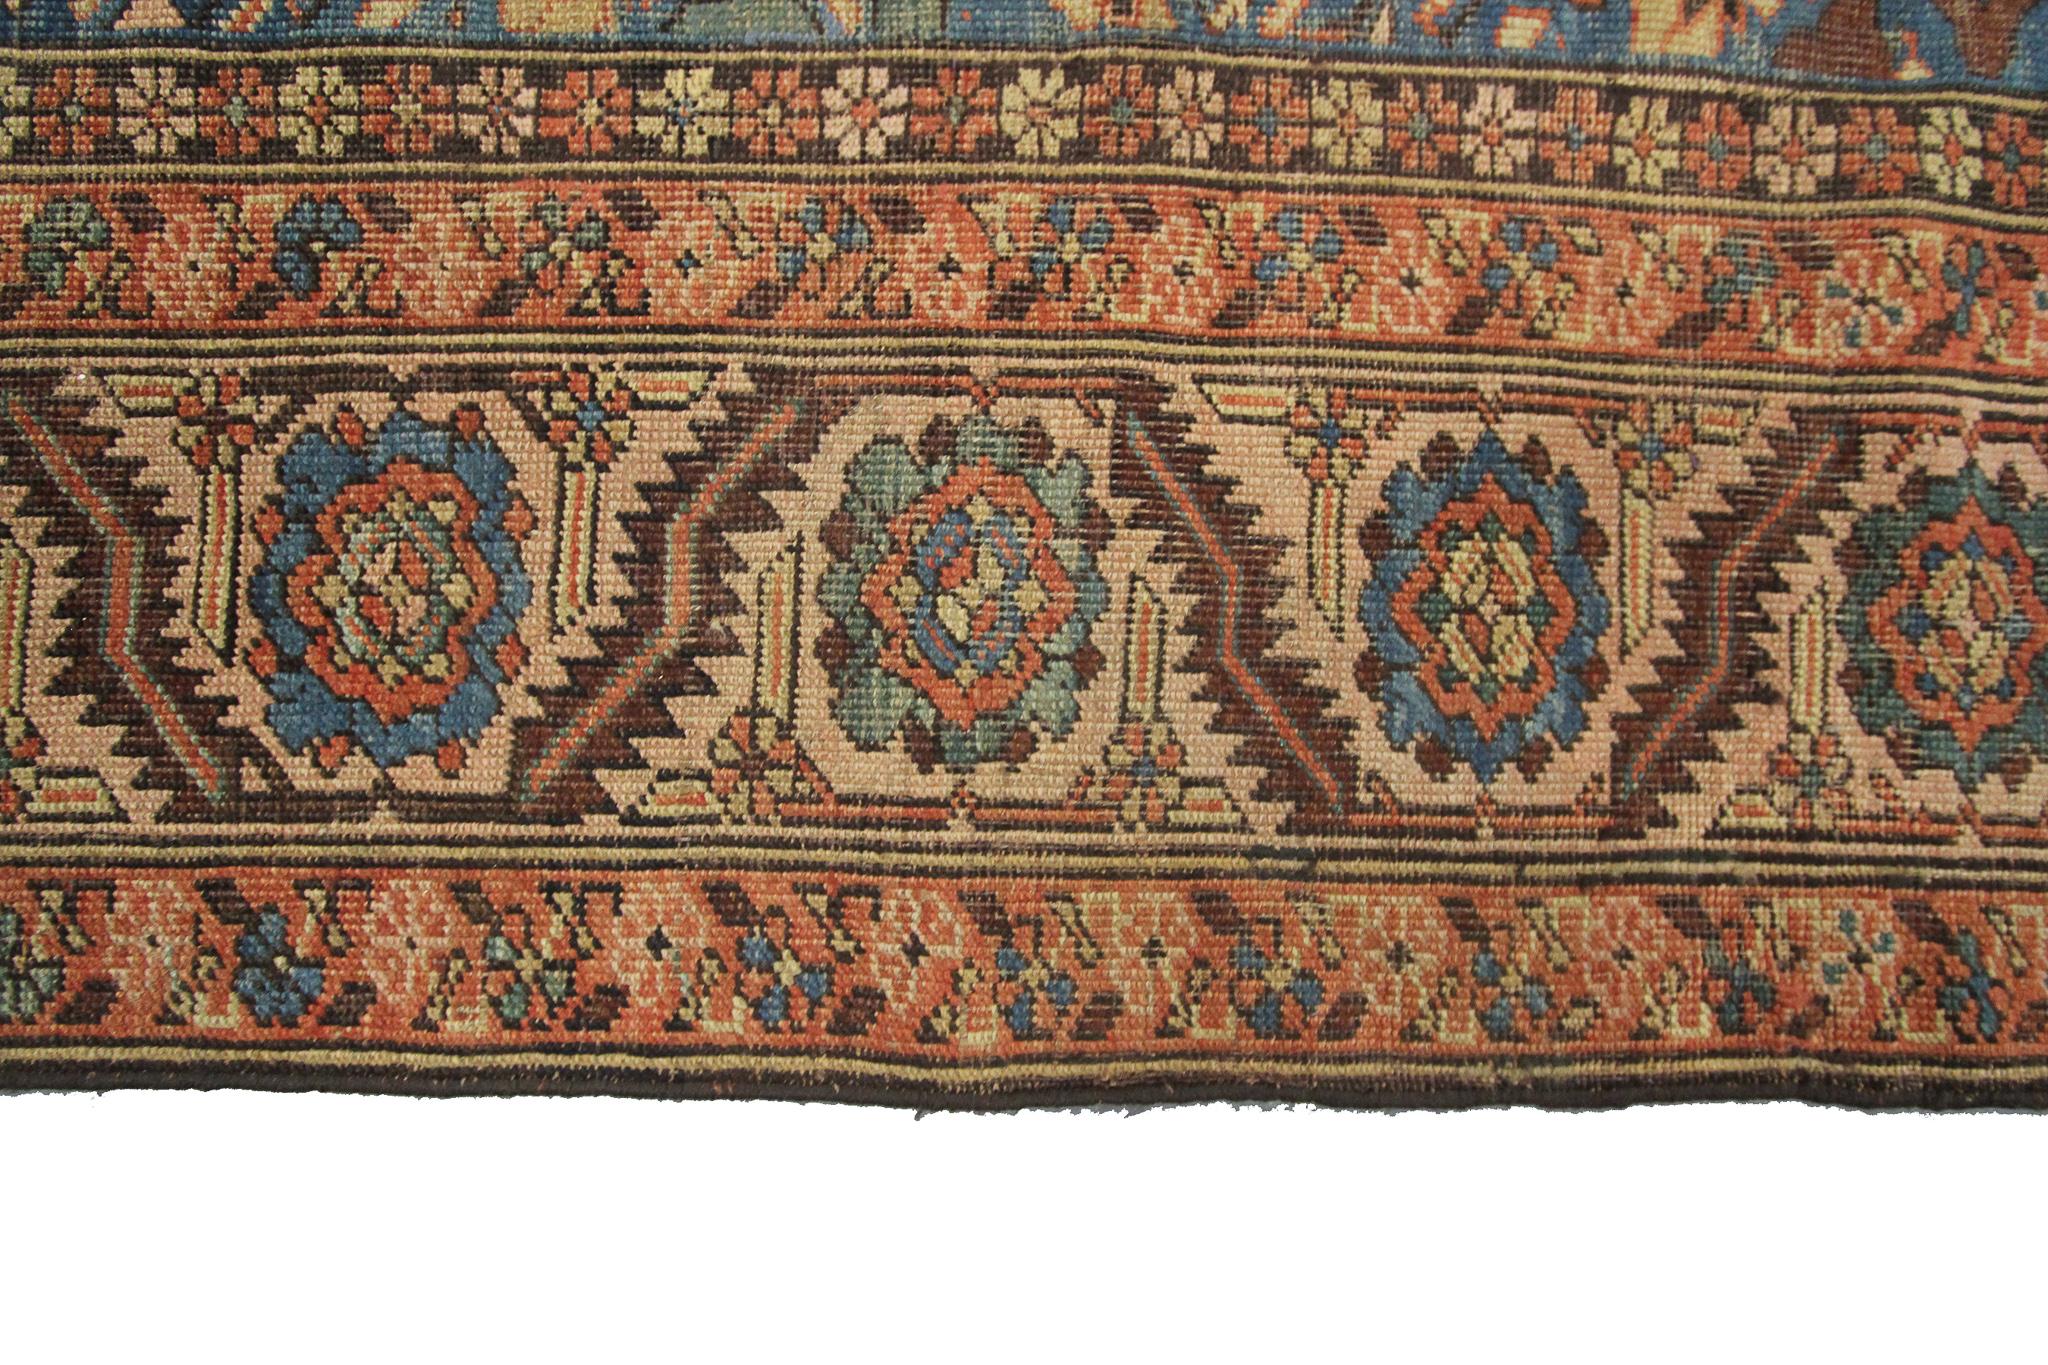 Late 19th Century 1870 Antique Serapi Rug Antique Bakhshayesh Rug Handmade Serapi For Sale